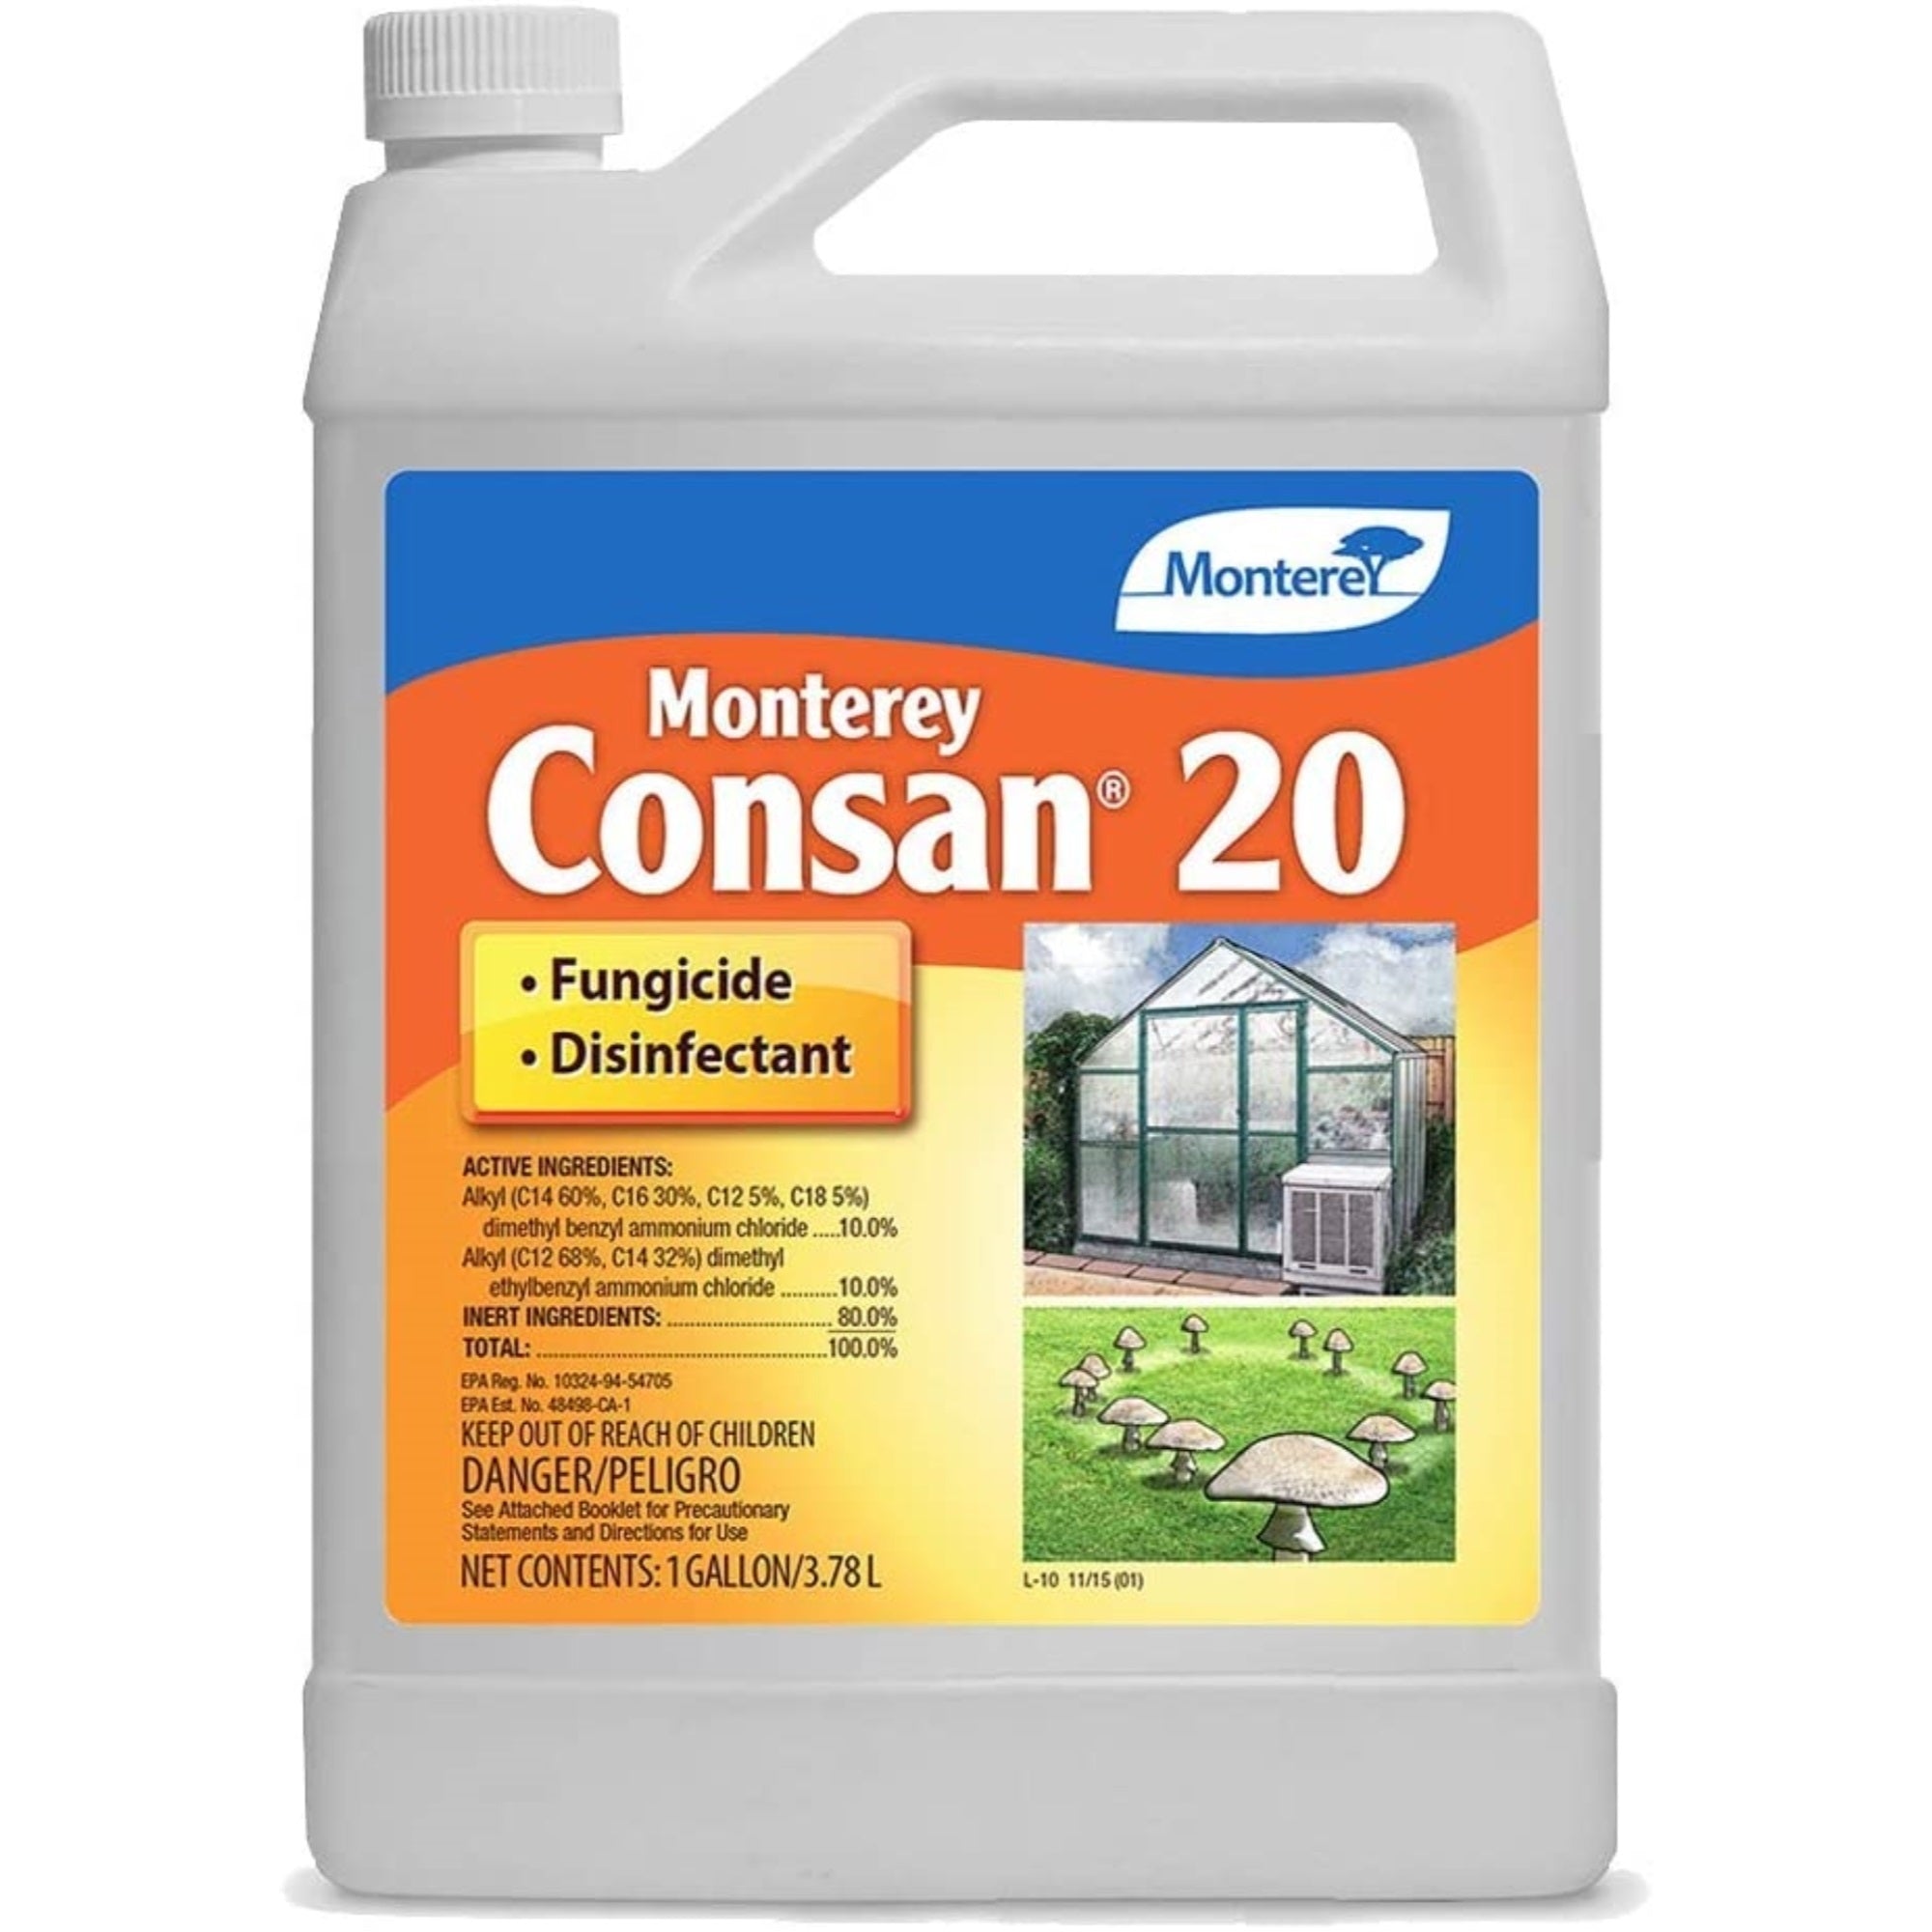 Monterey Consan 20 Fungicide Disinfectant Deodorizer Concentrate, 1 Gallon